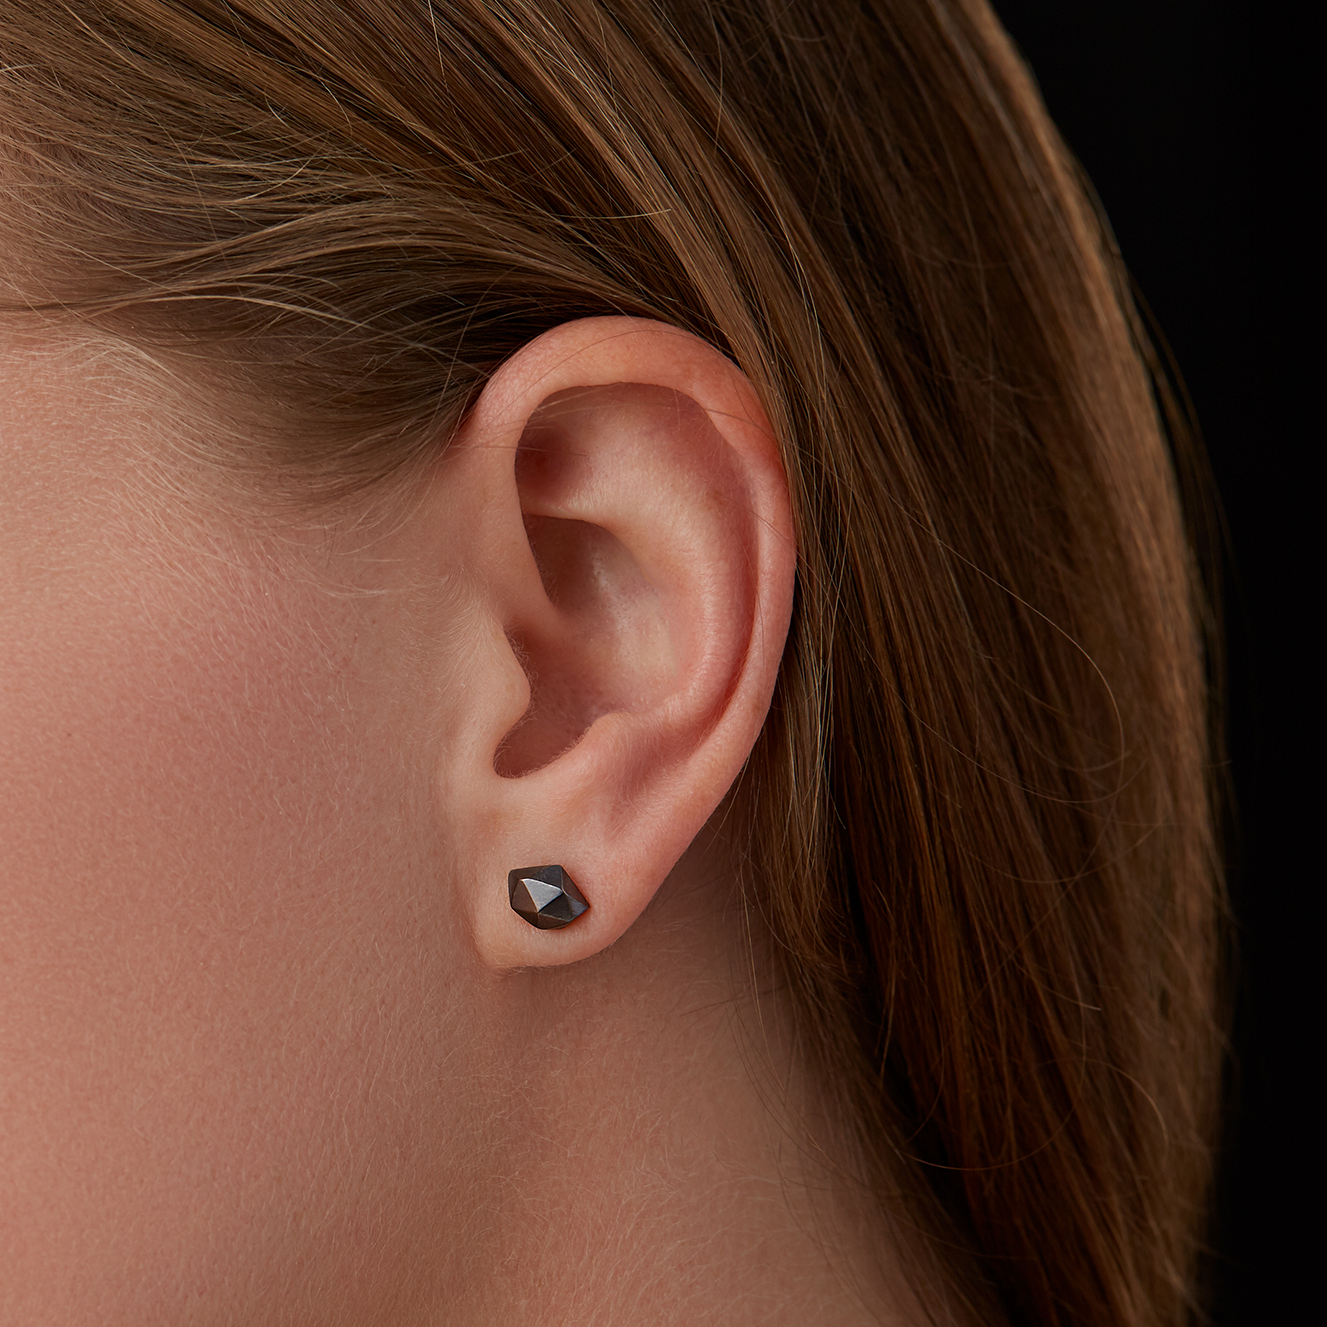 Oxidized Silver Tiny Fragment Stud Earrings faceted stud earrings on an ear